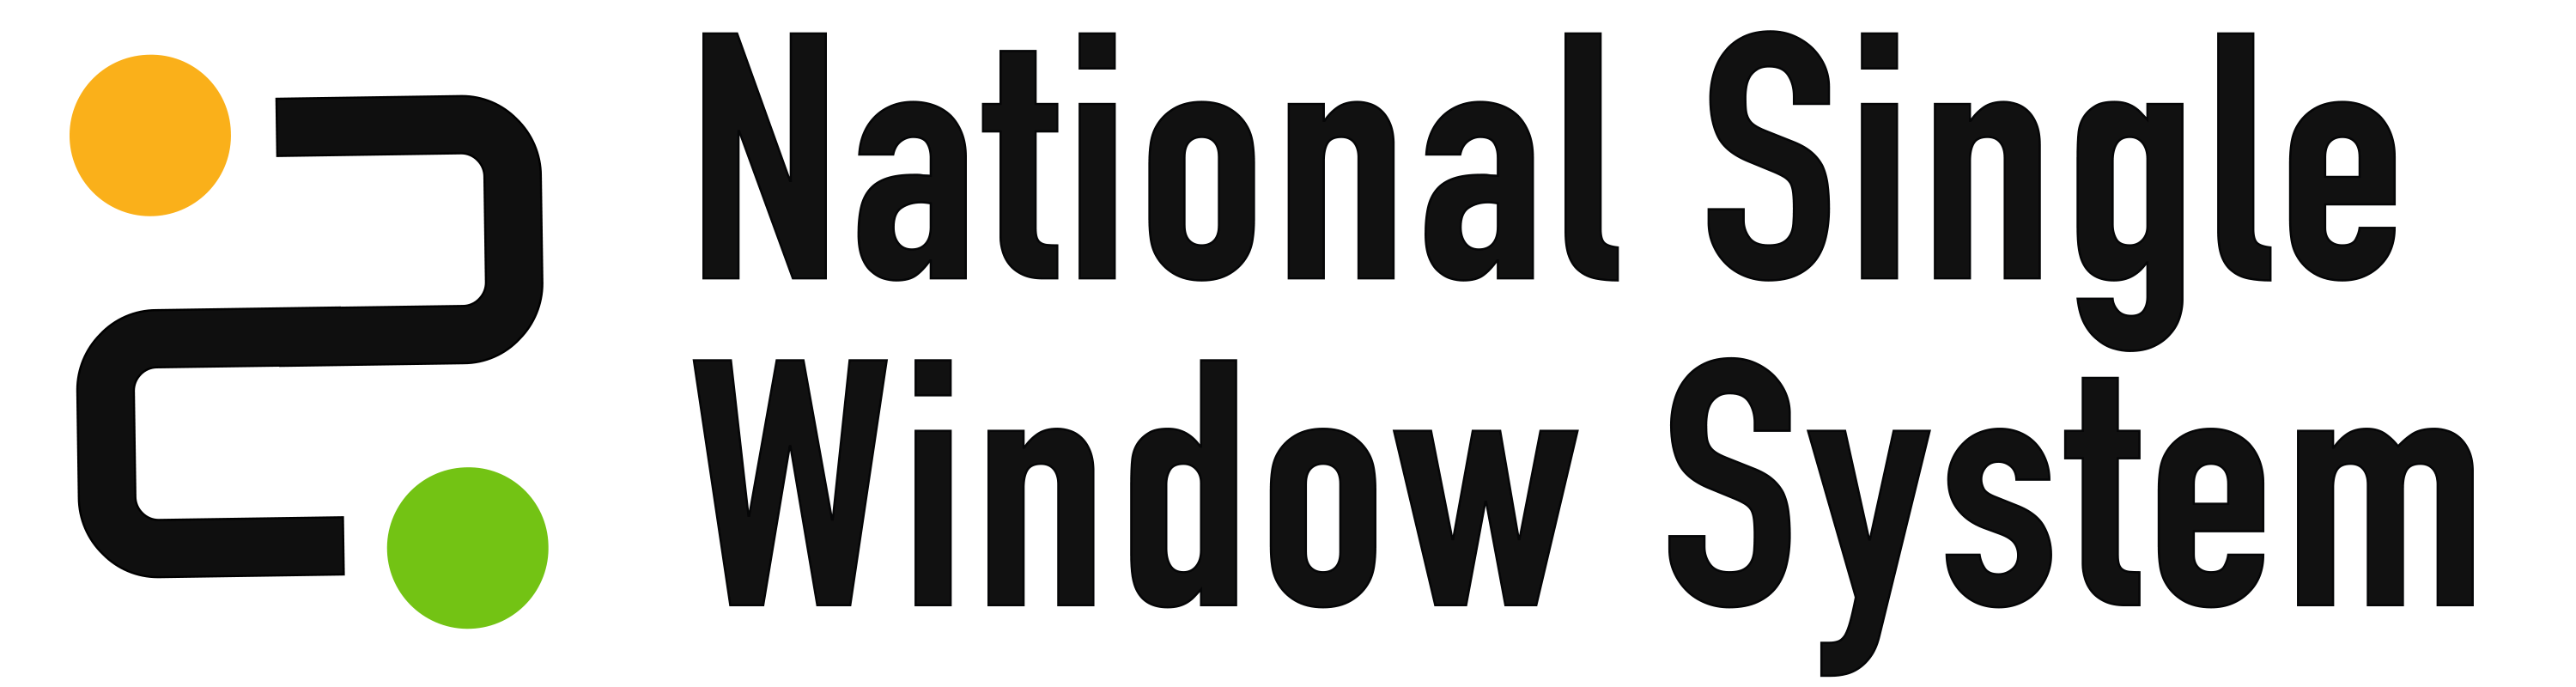 National Single Windiow System